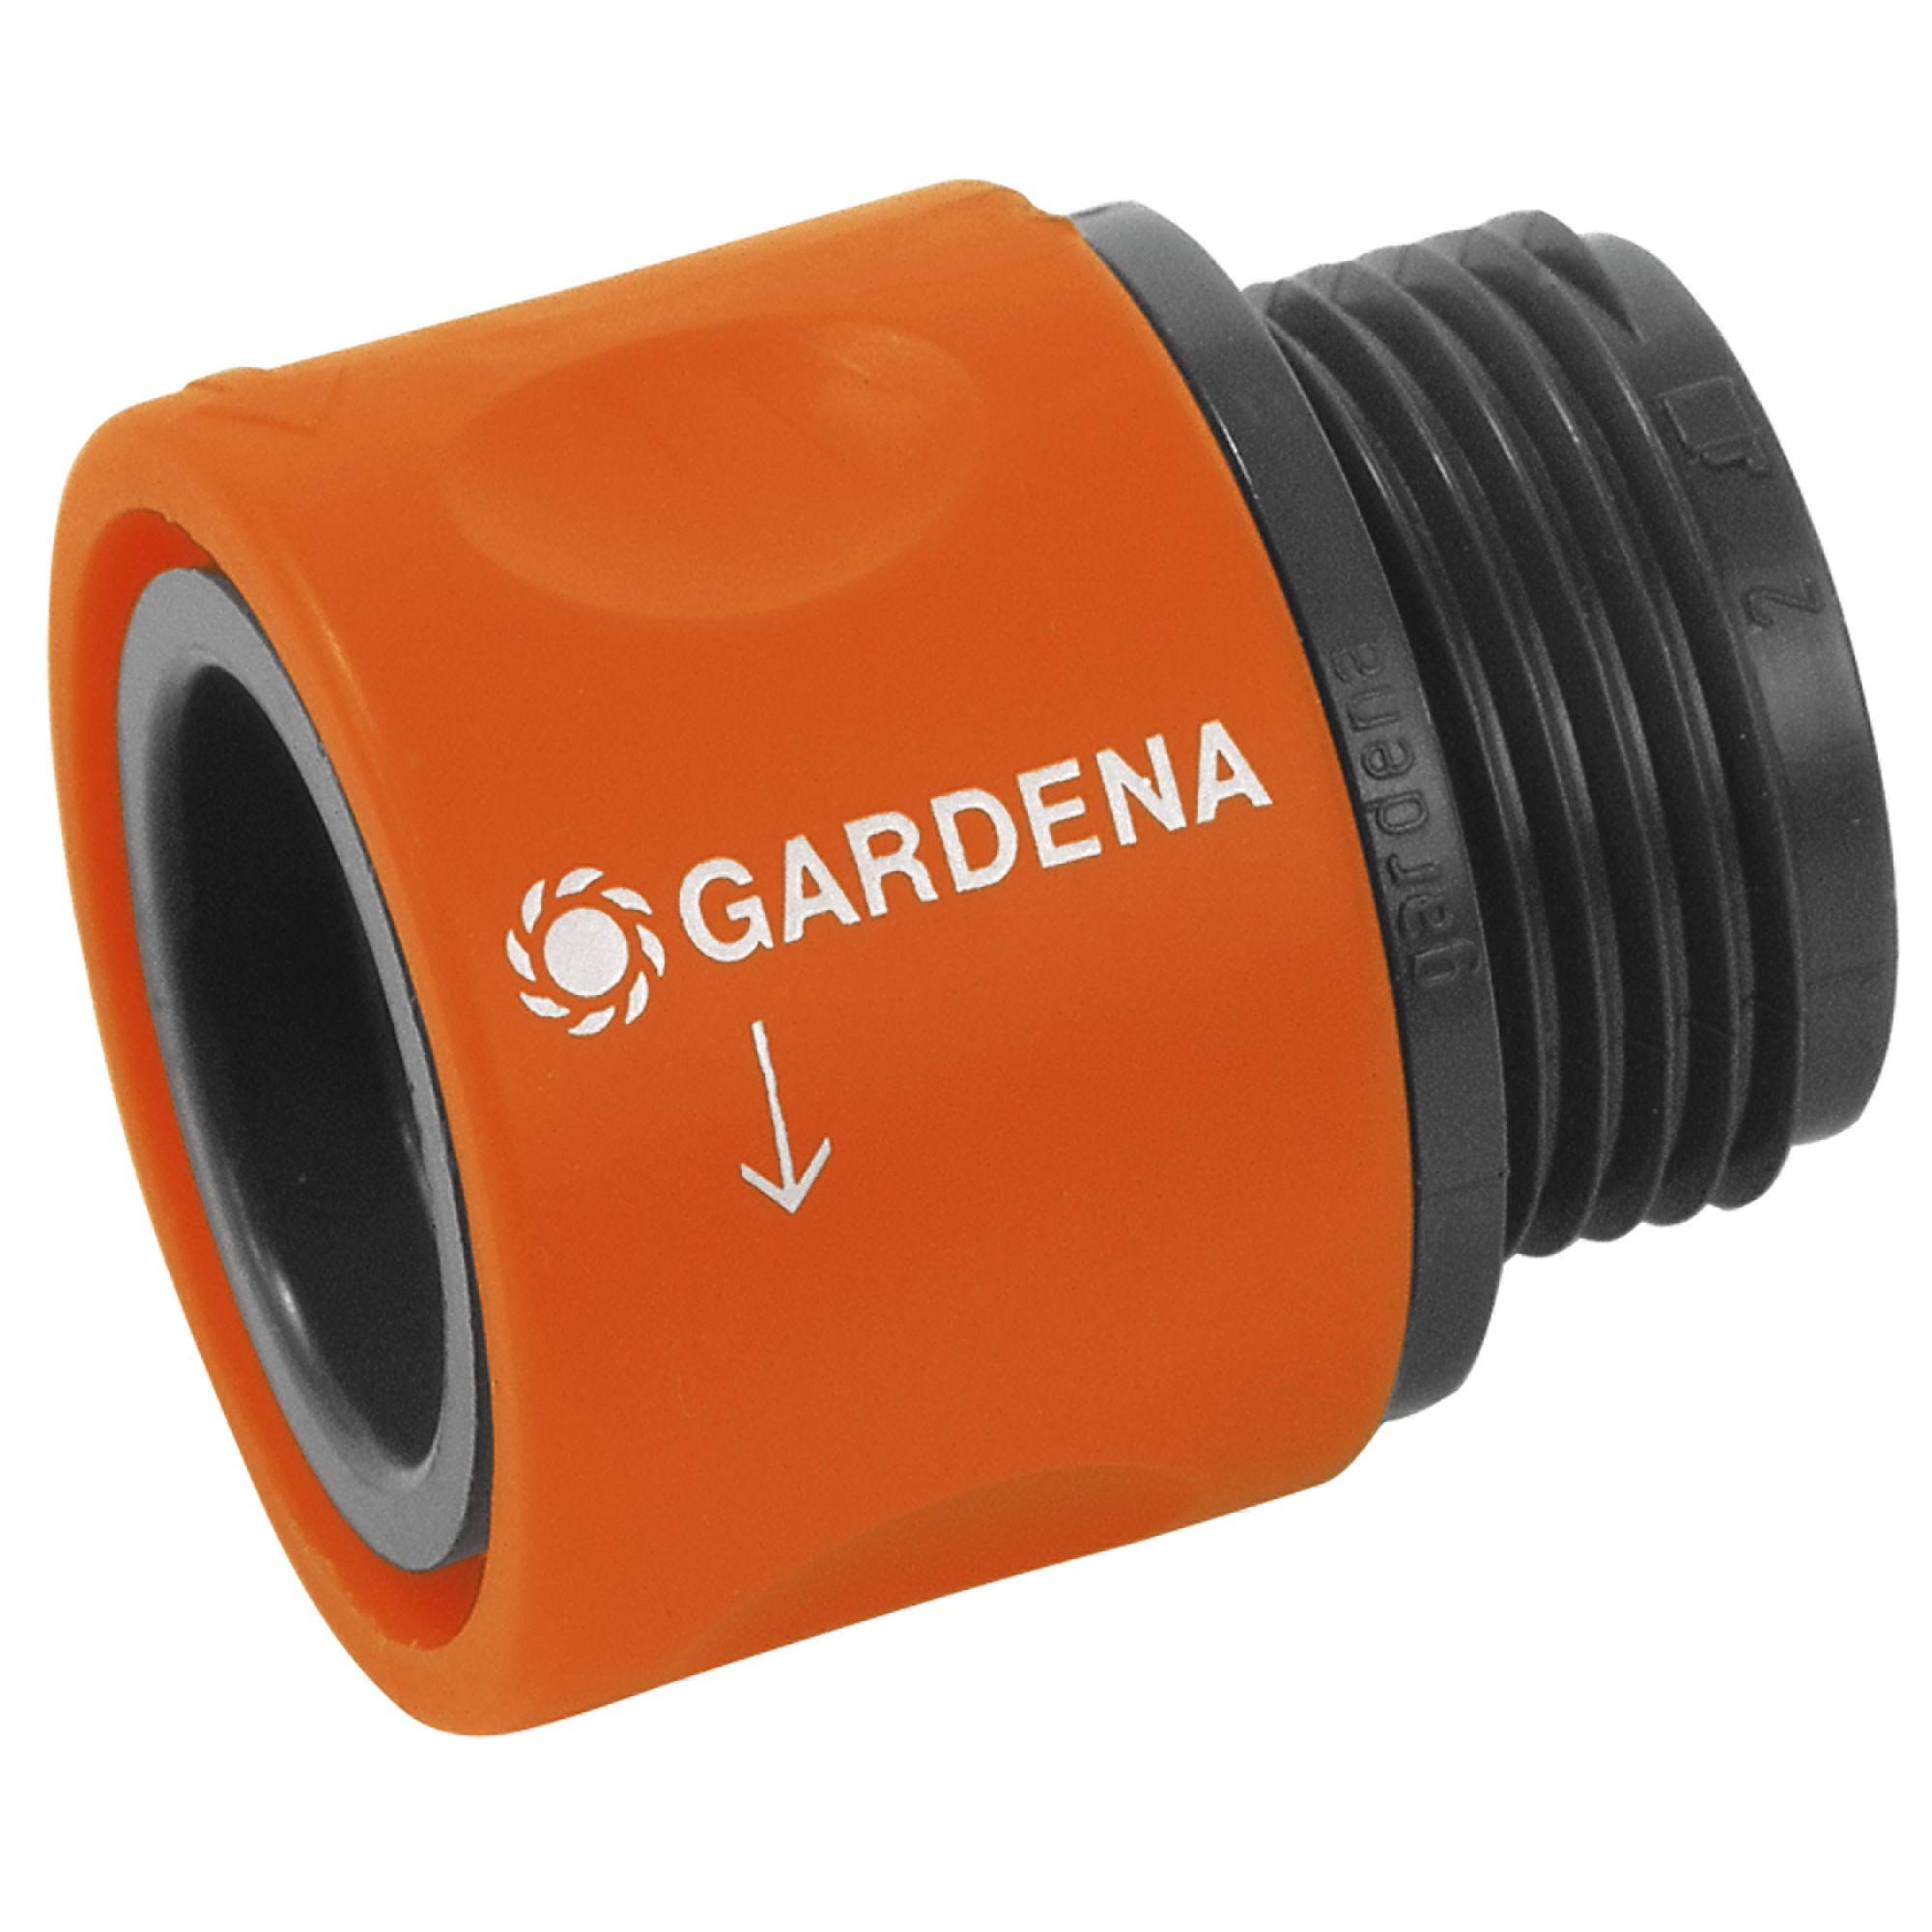 GARDENA Hose Connector Set for Indoor Taps, Grey/Orange